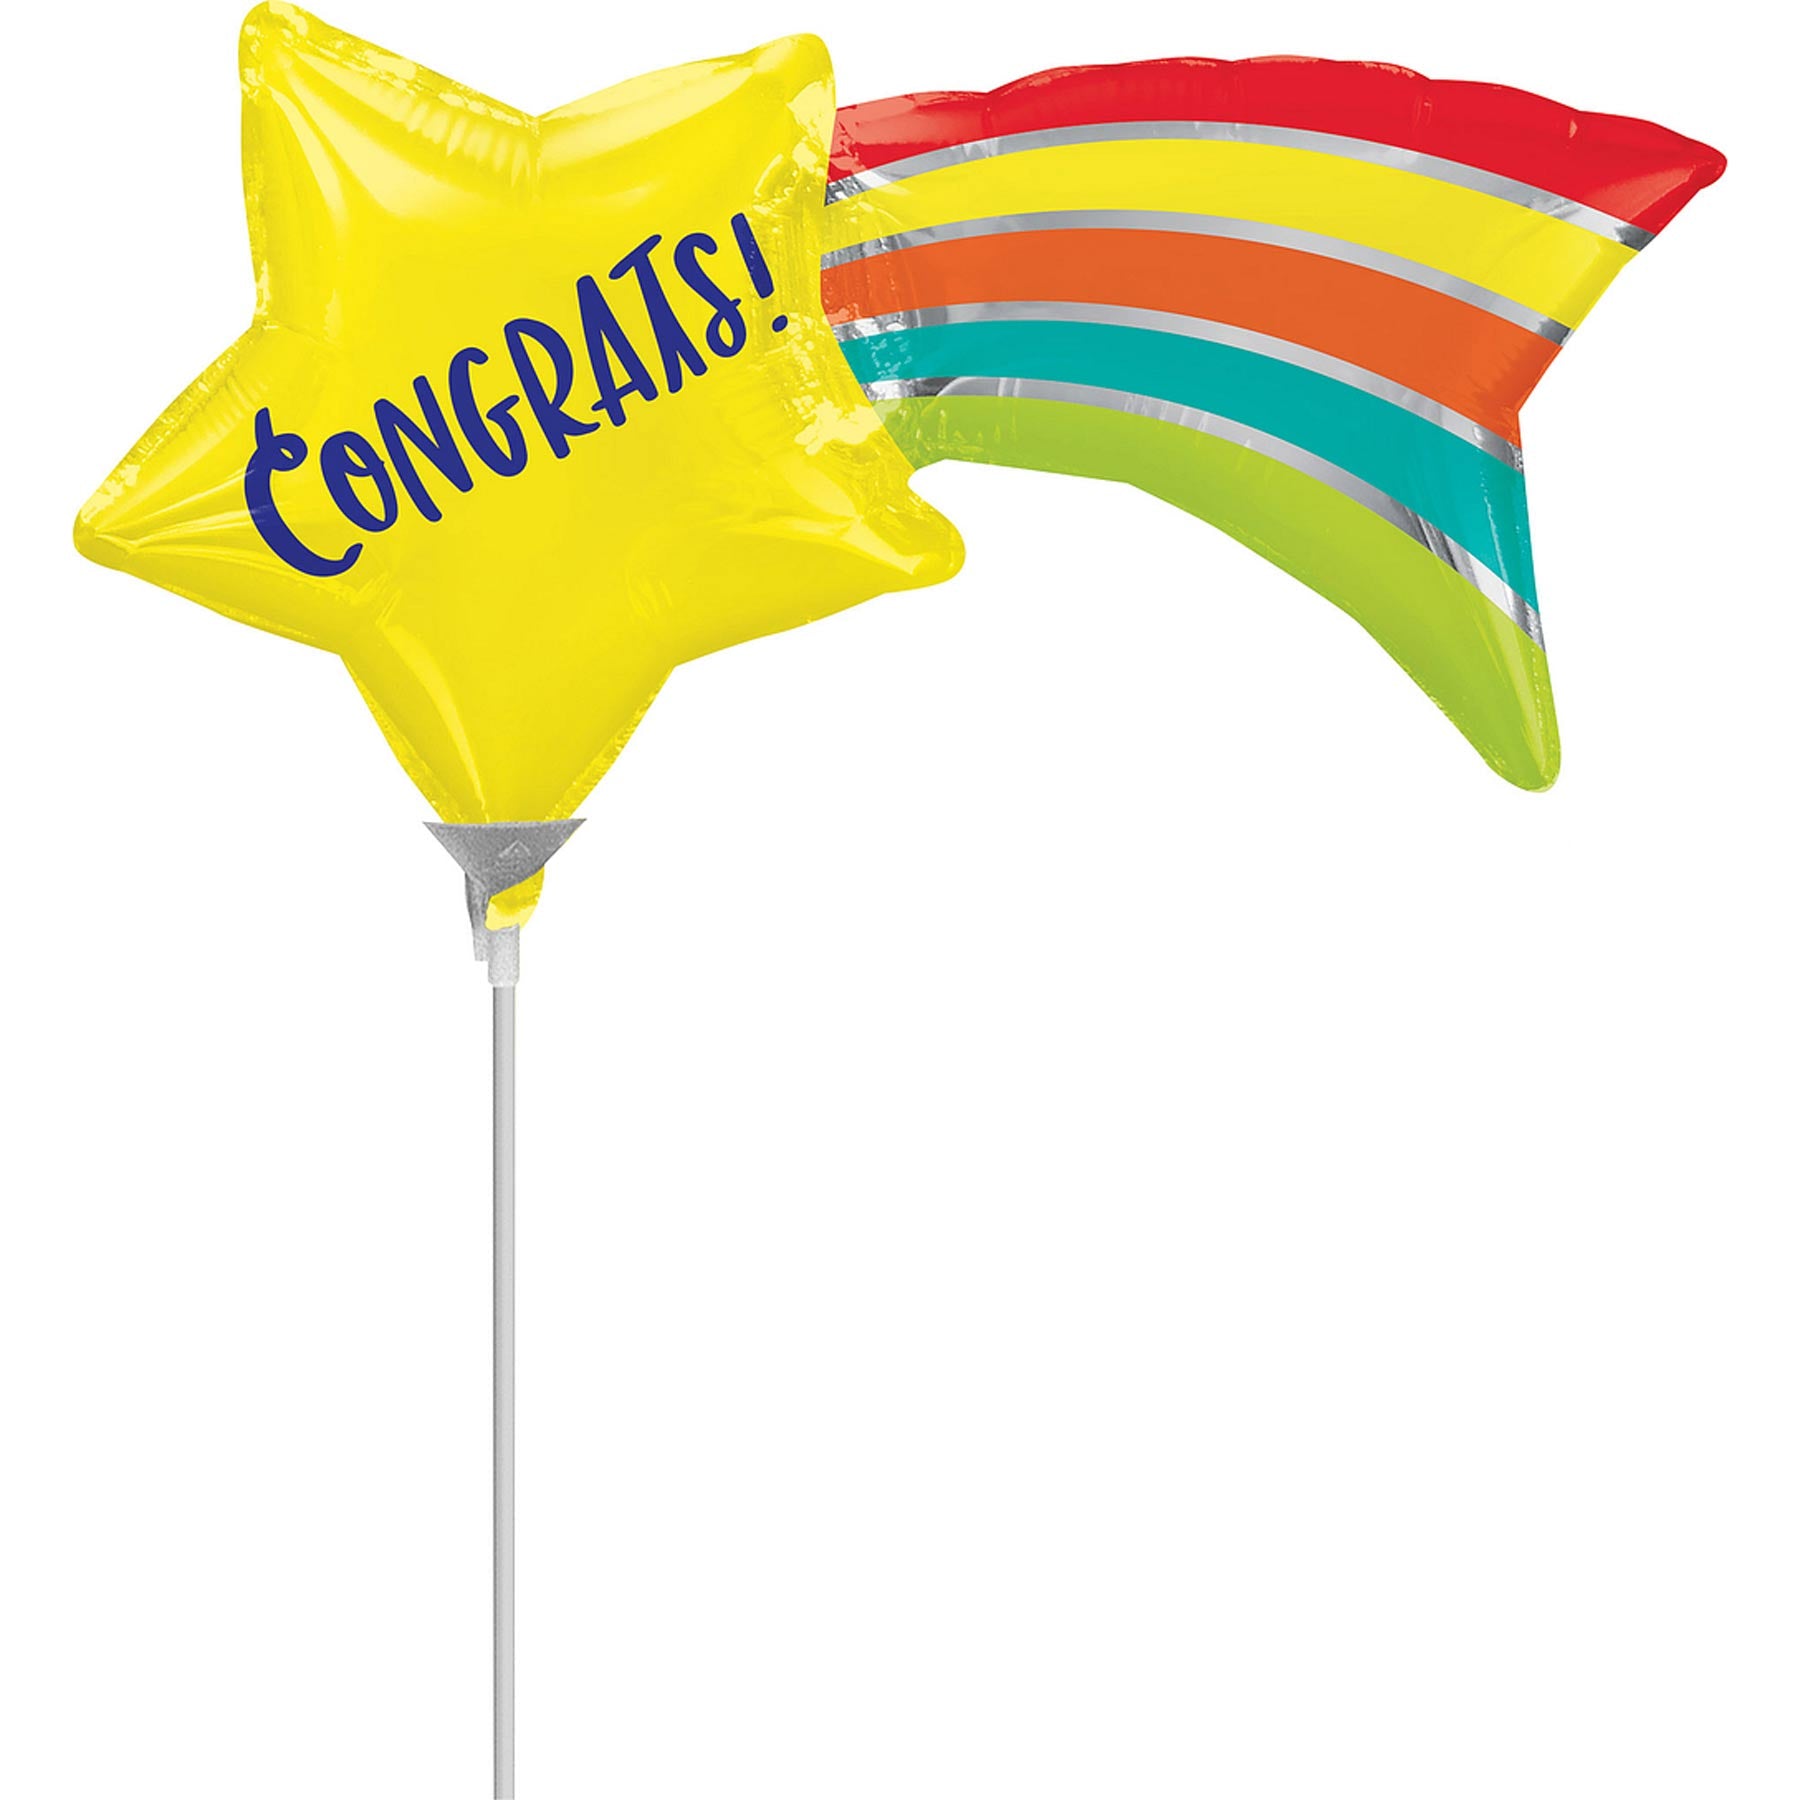 Congrats Shooting Star Mini Shape Balloon 38x17cm